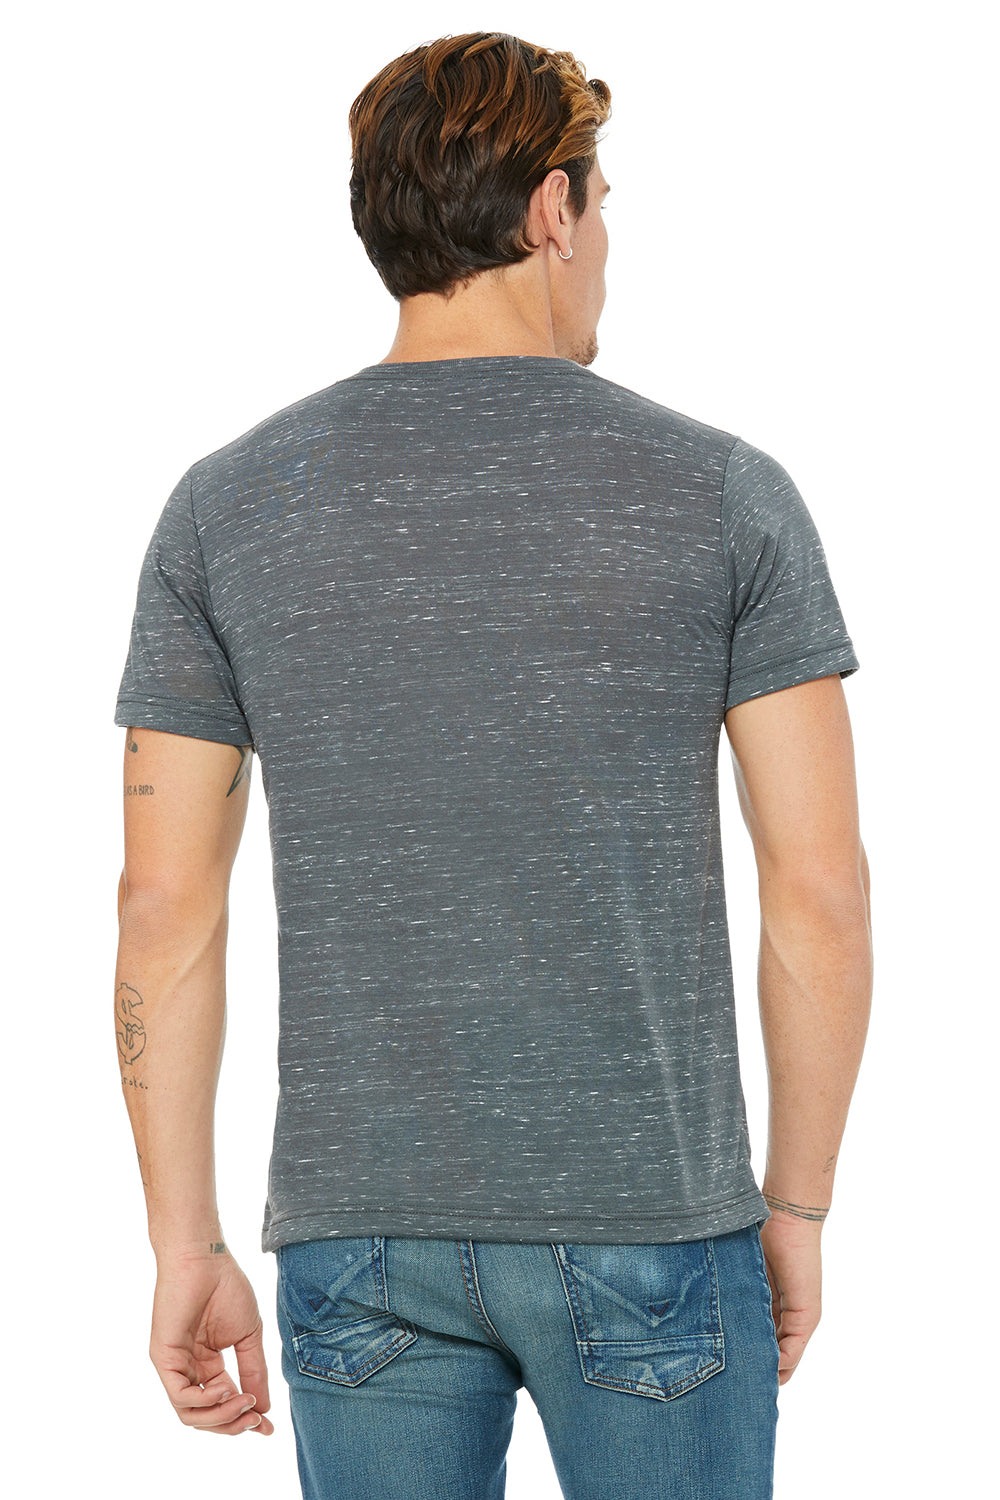 Bella + Canvas BC3005/3005/3655C Mens Jersey Short Sleeve V-Neck T-Shirt Charcoal Grey Marble Model Back